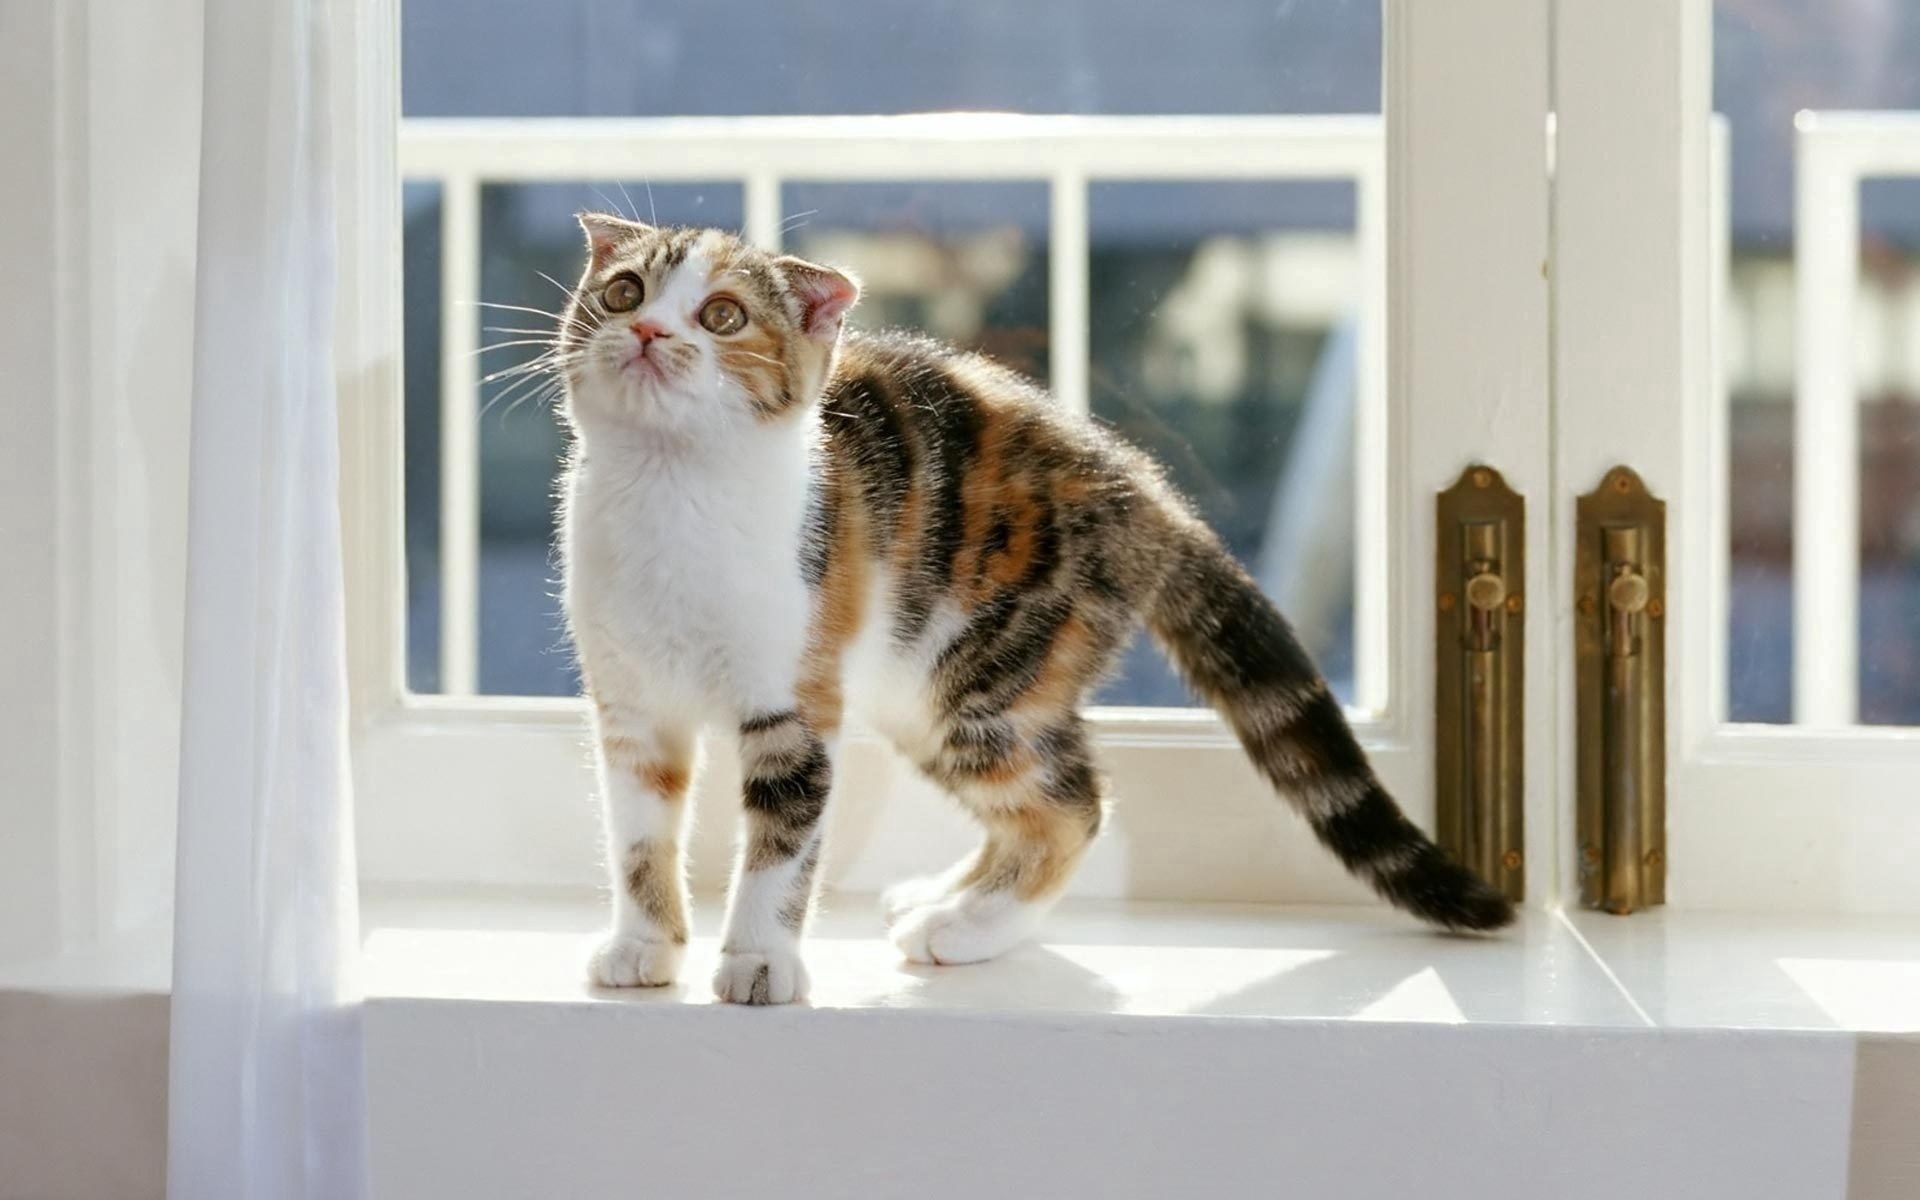 animals, kitty, kitten, striped, window sill, windowsill, mindfulness, attentiveness